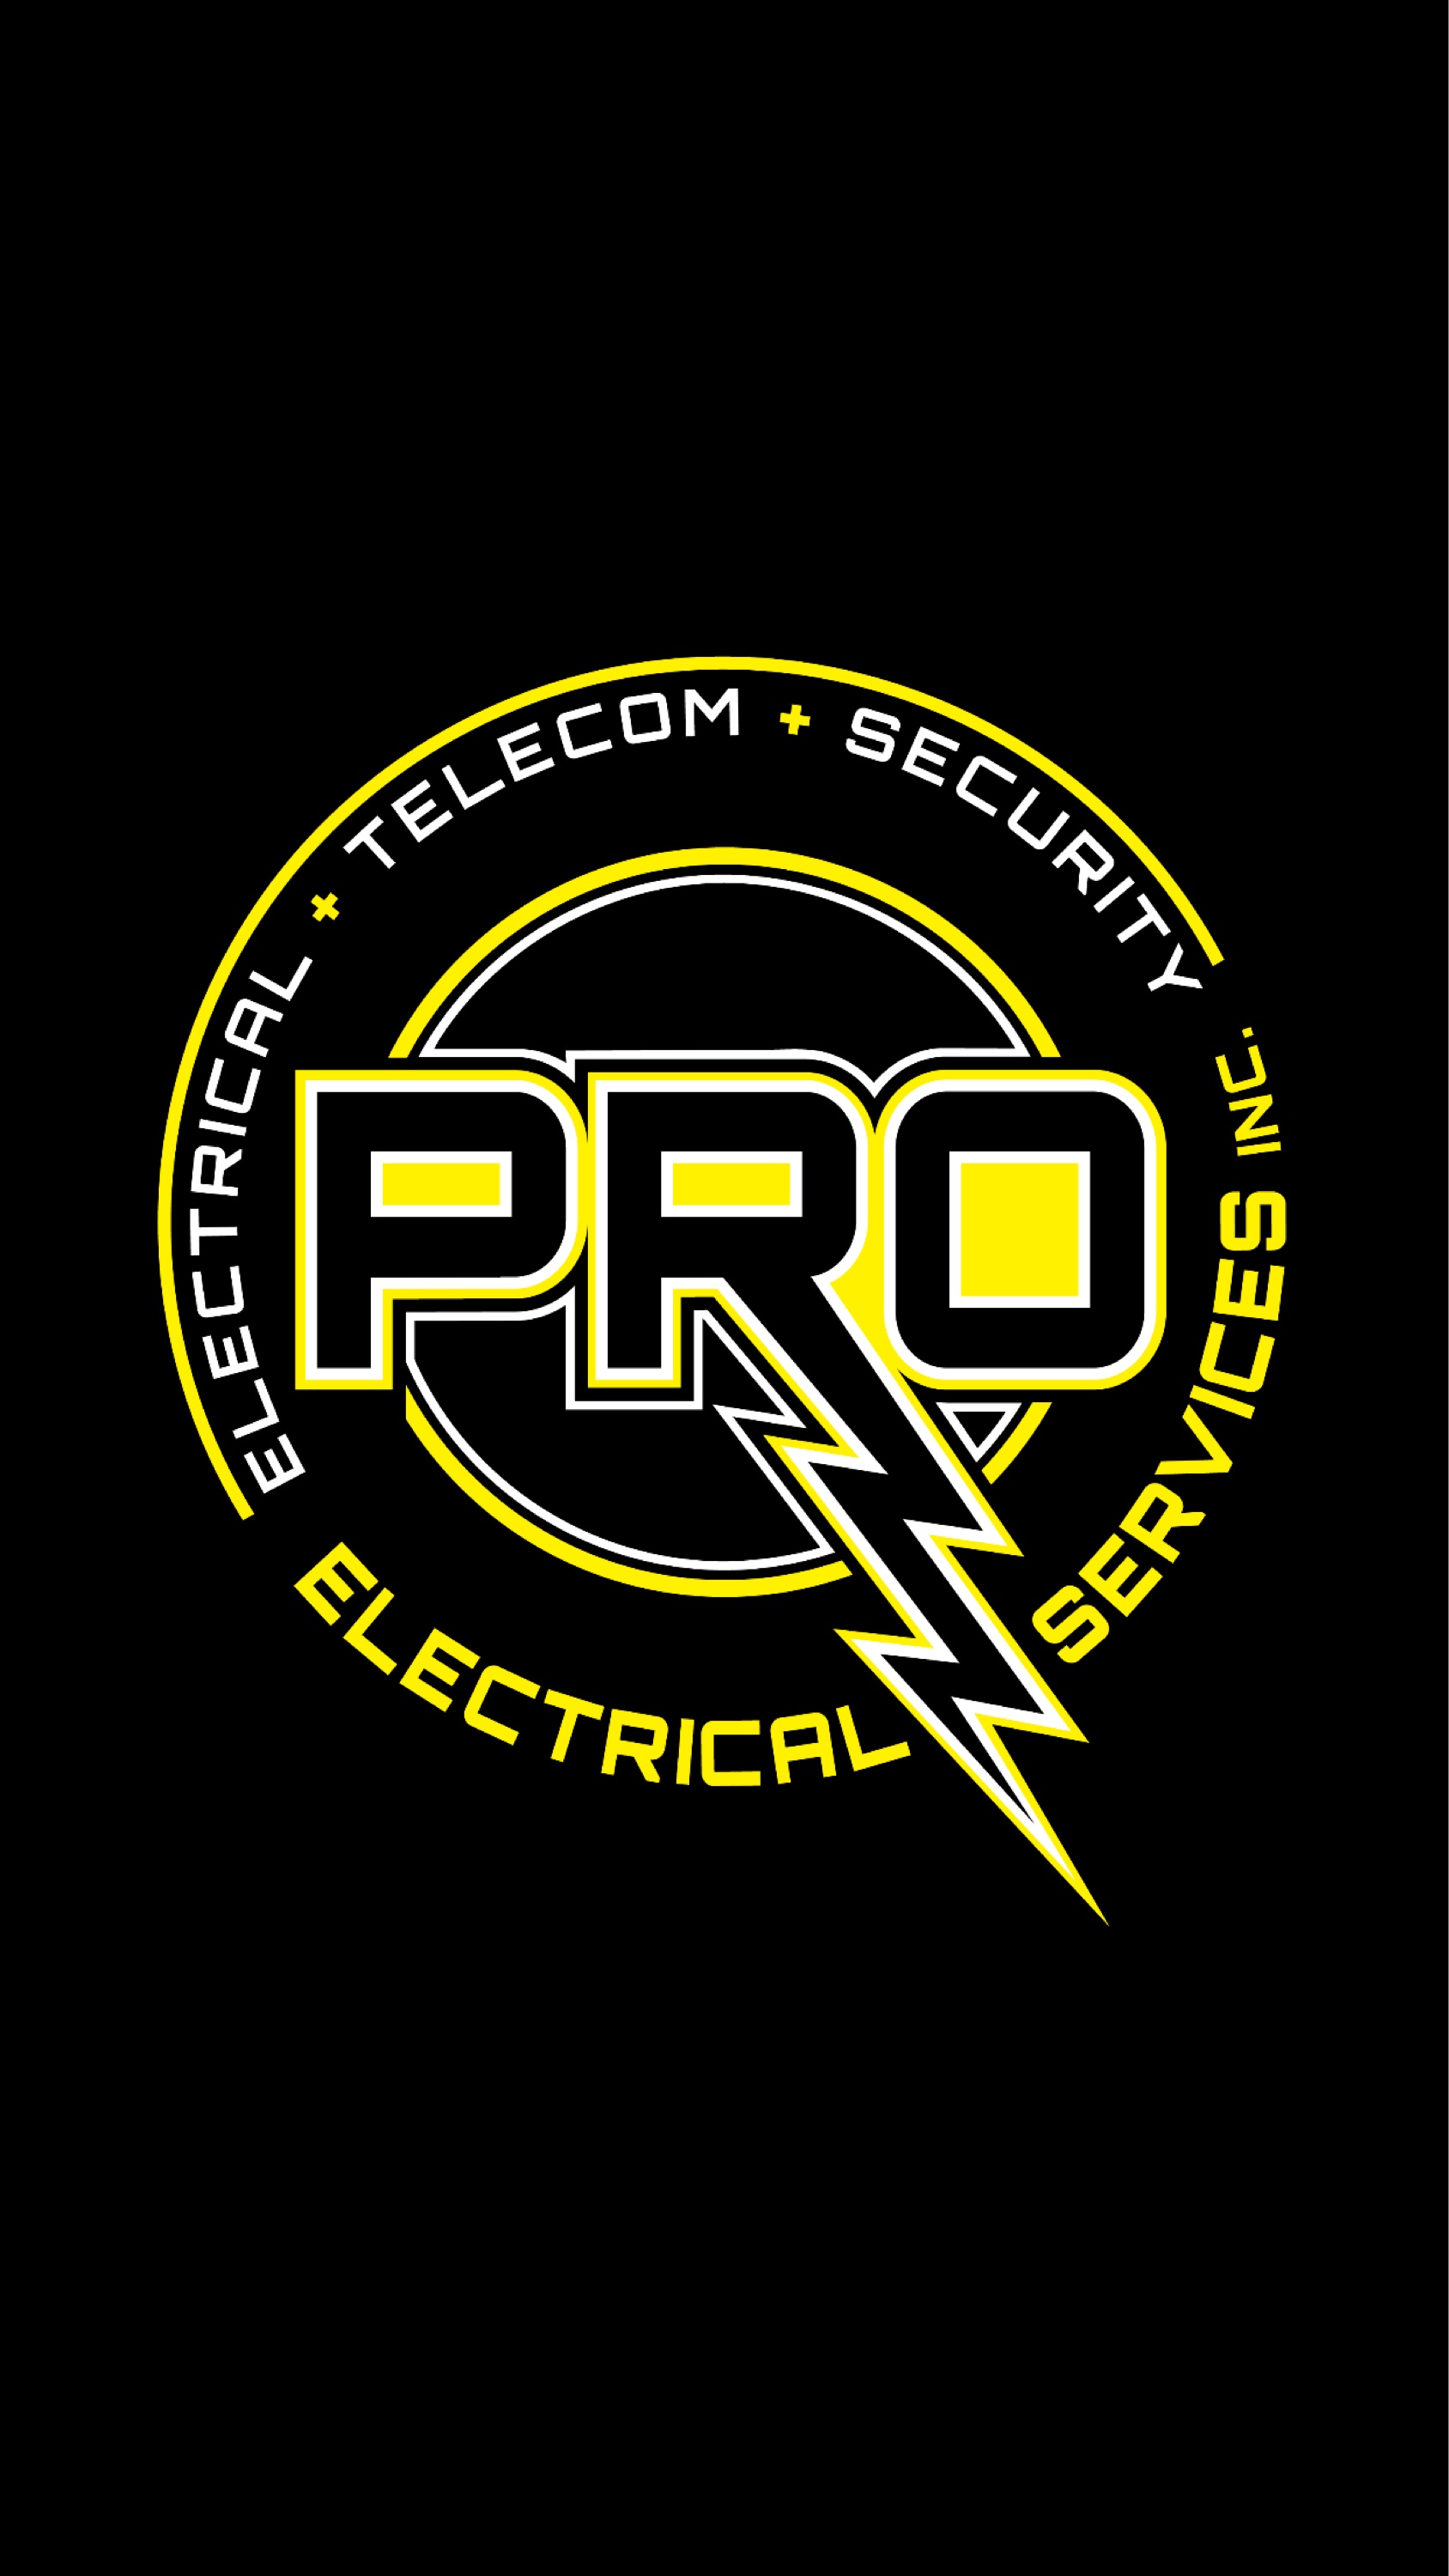 Pro Electrical Services, Inc. Logo